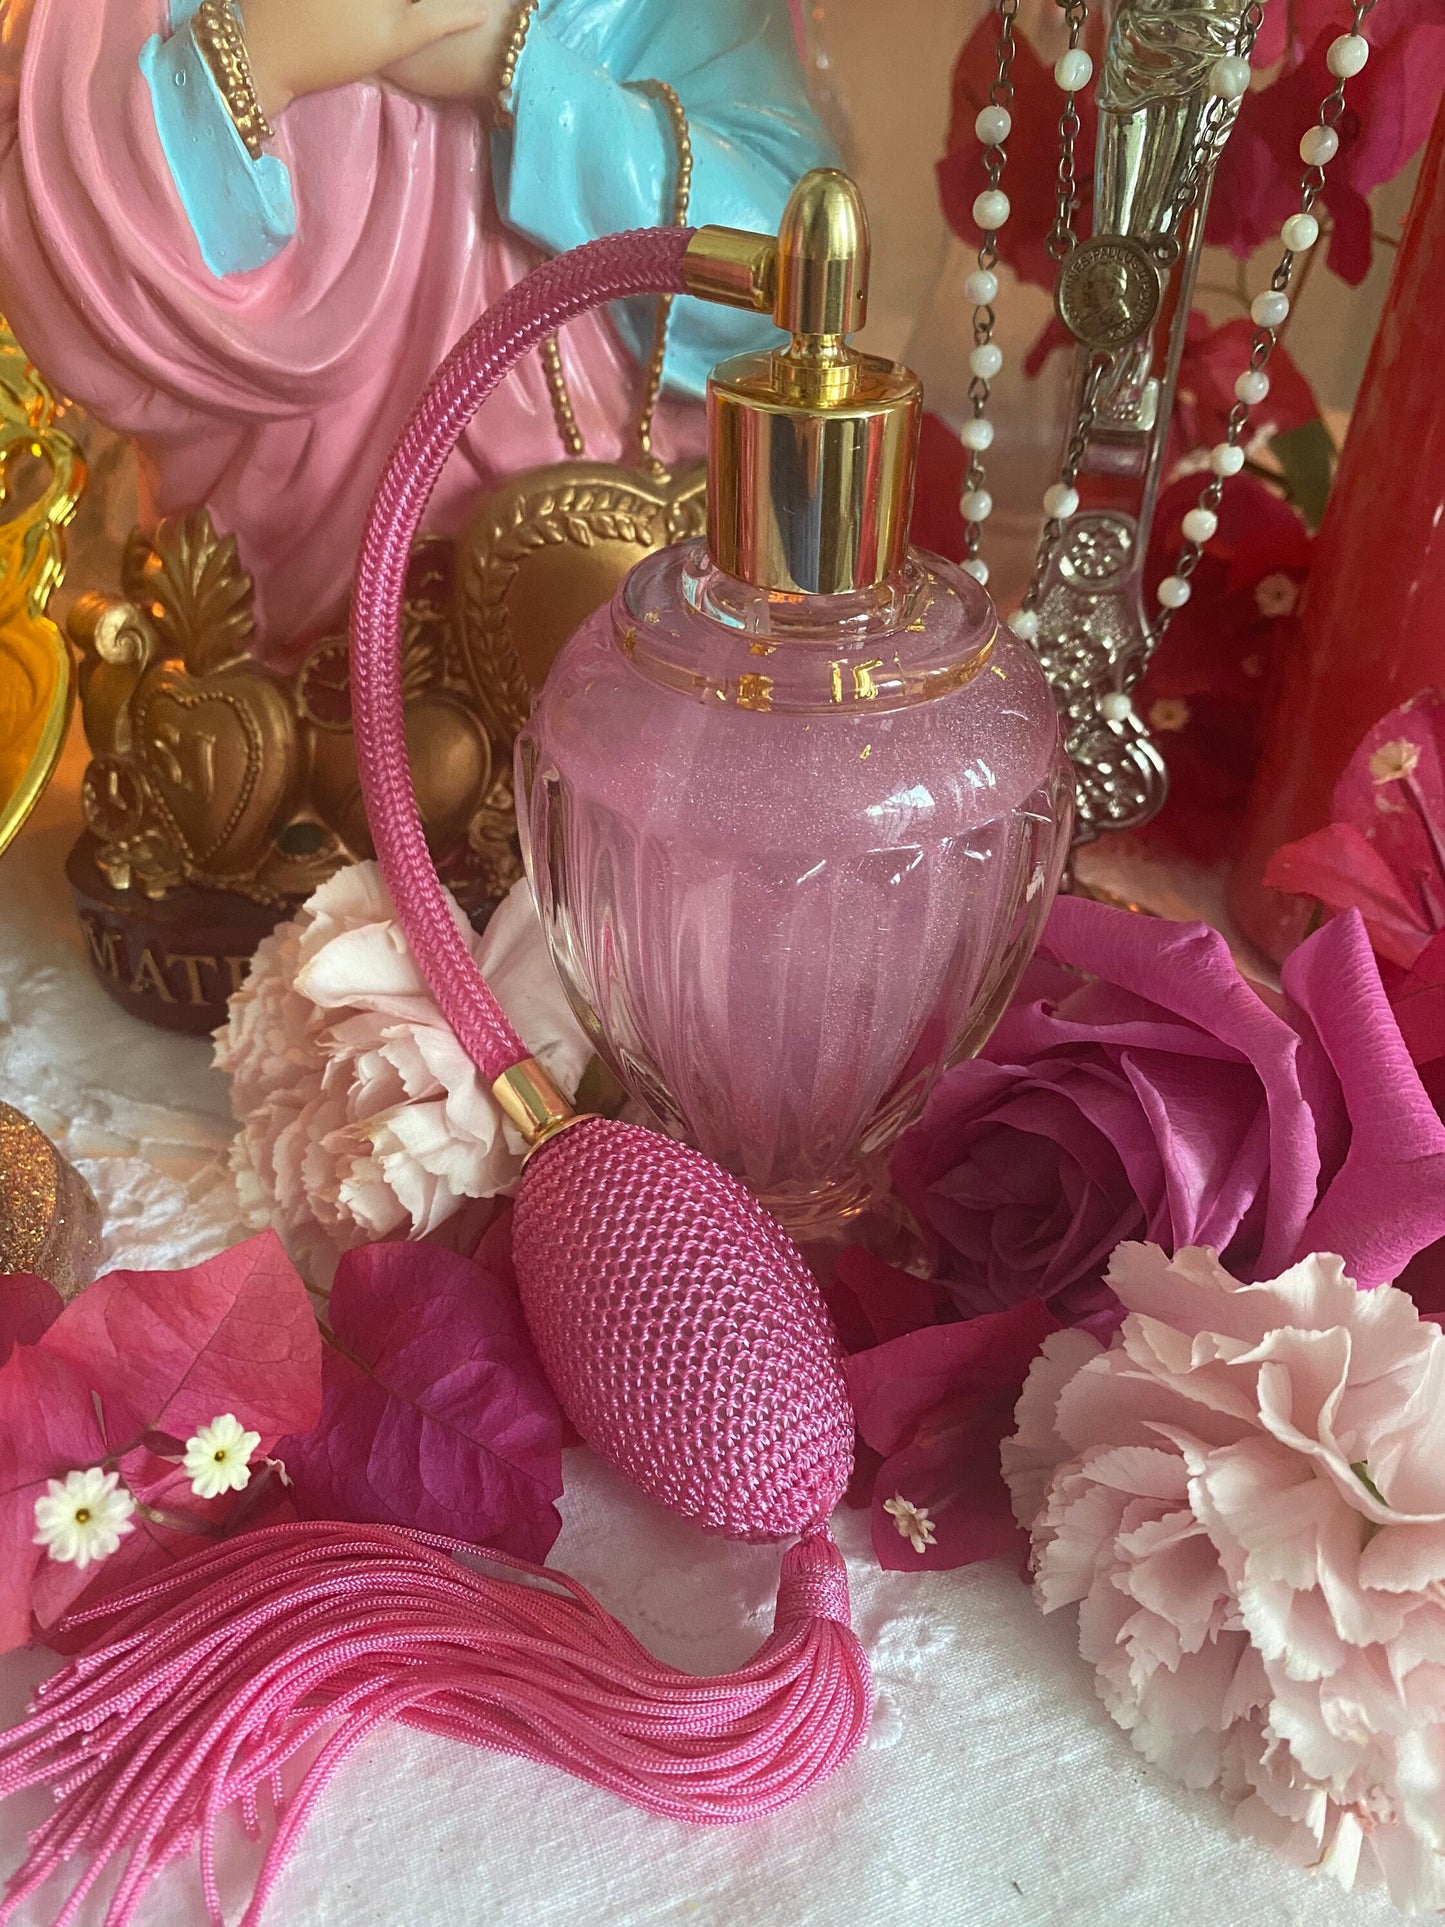 Metresili Love & Luxury Perfume